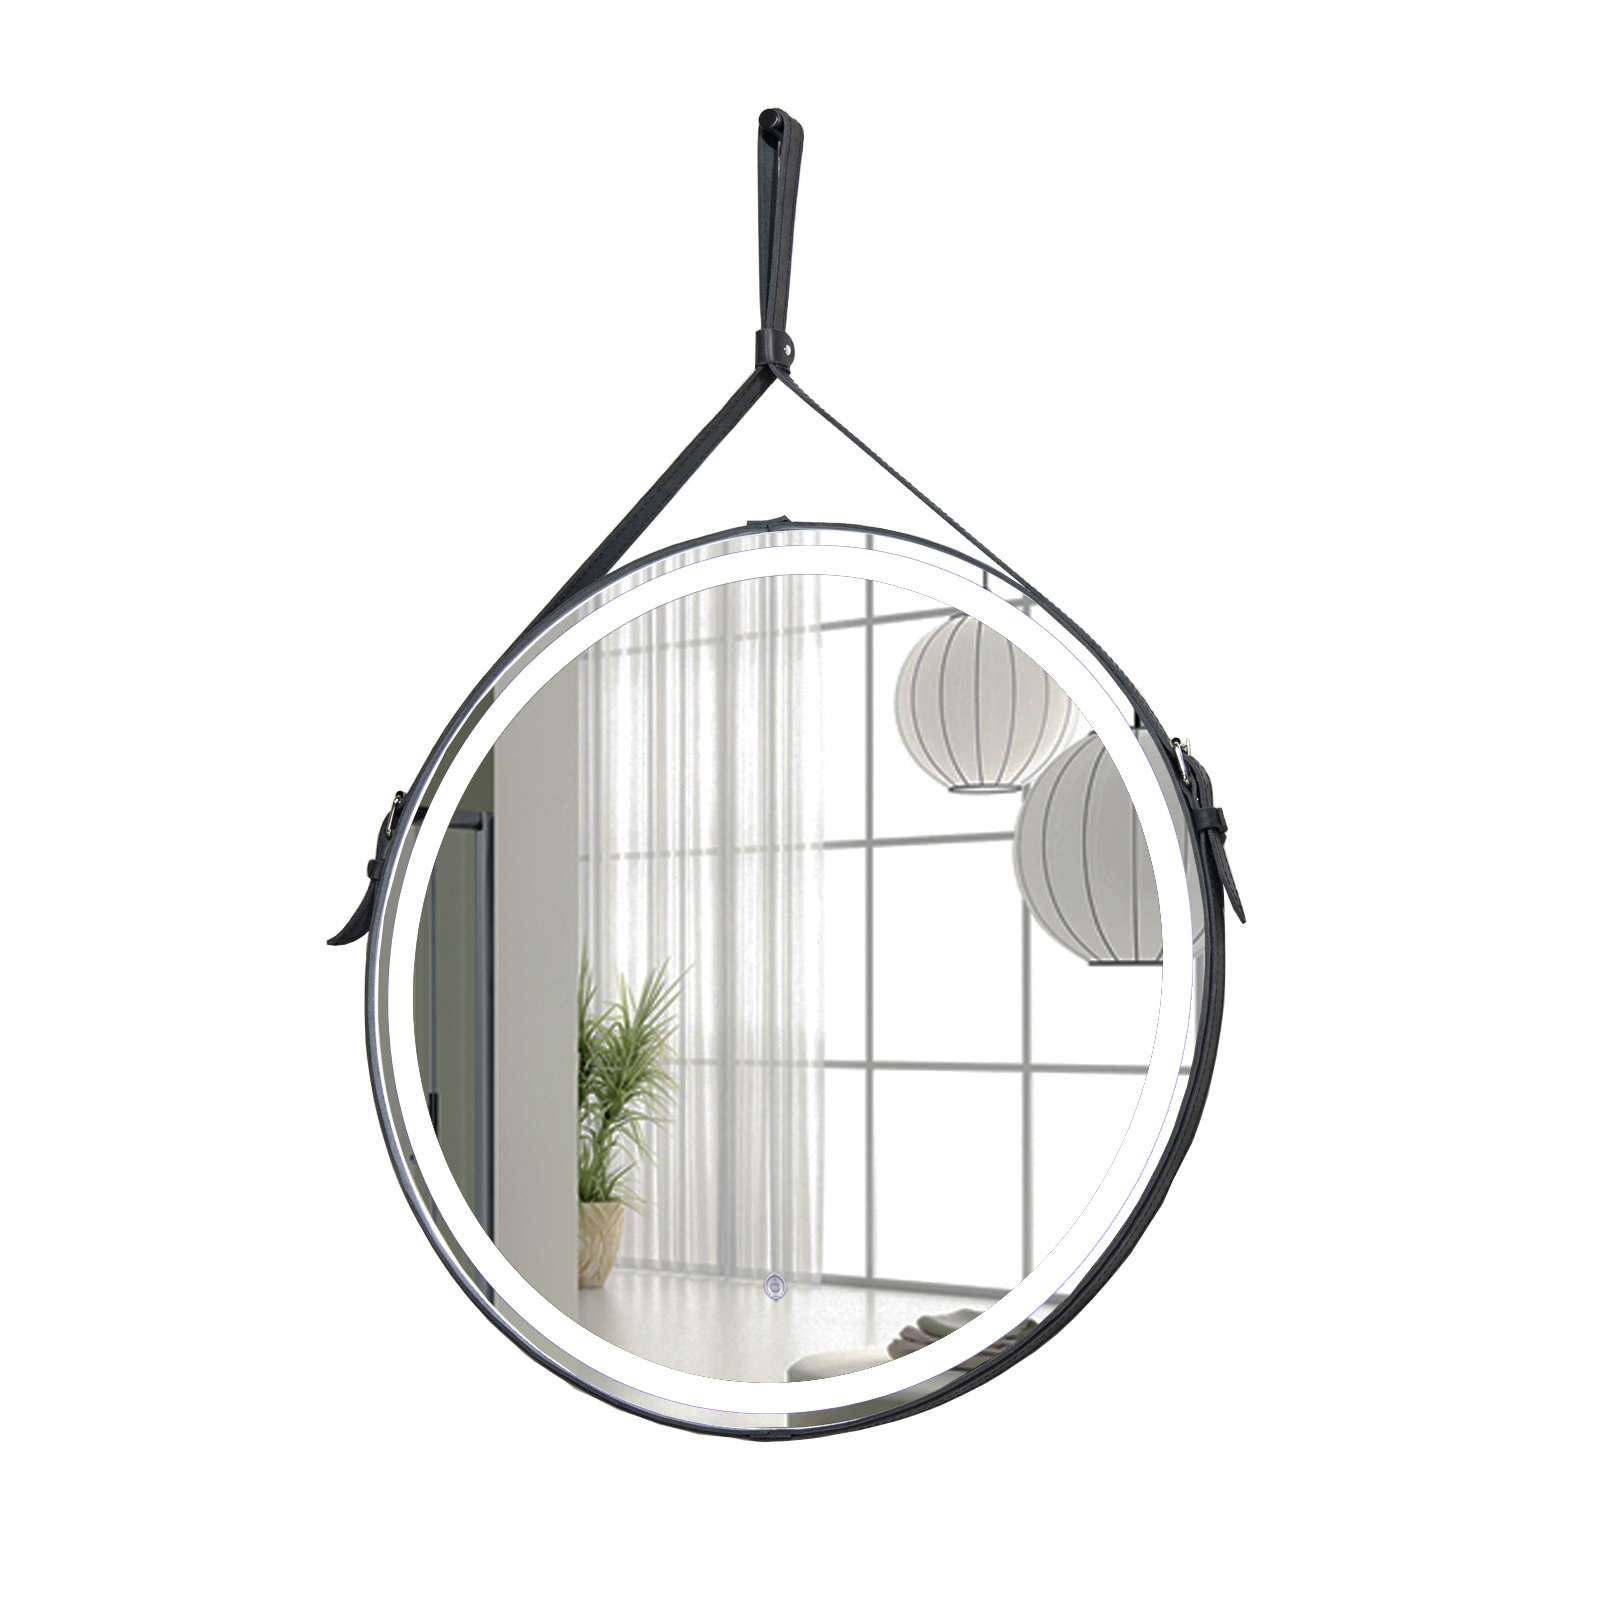 Зеркало La Tezza с LED подсветкой, сенсор, диммер, круглое, ремень кожа чёрный, 800х800